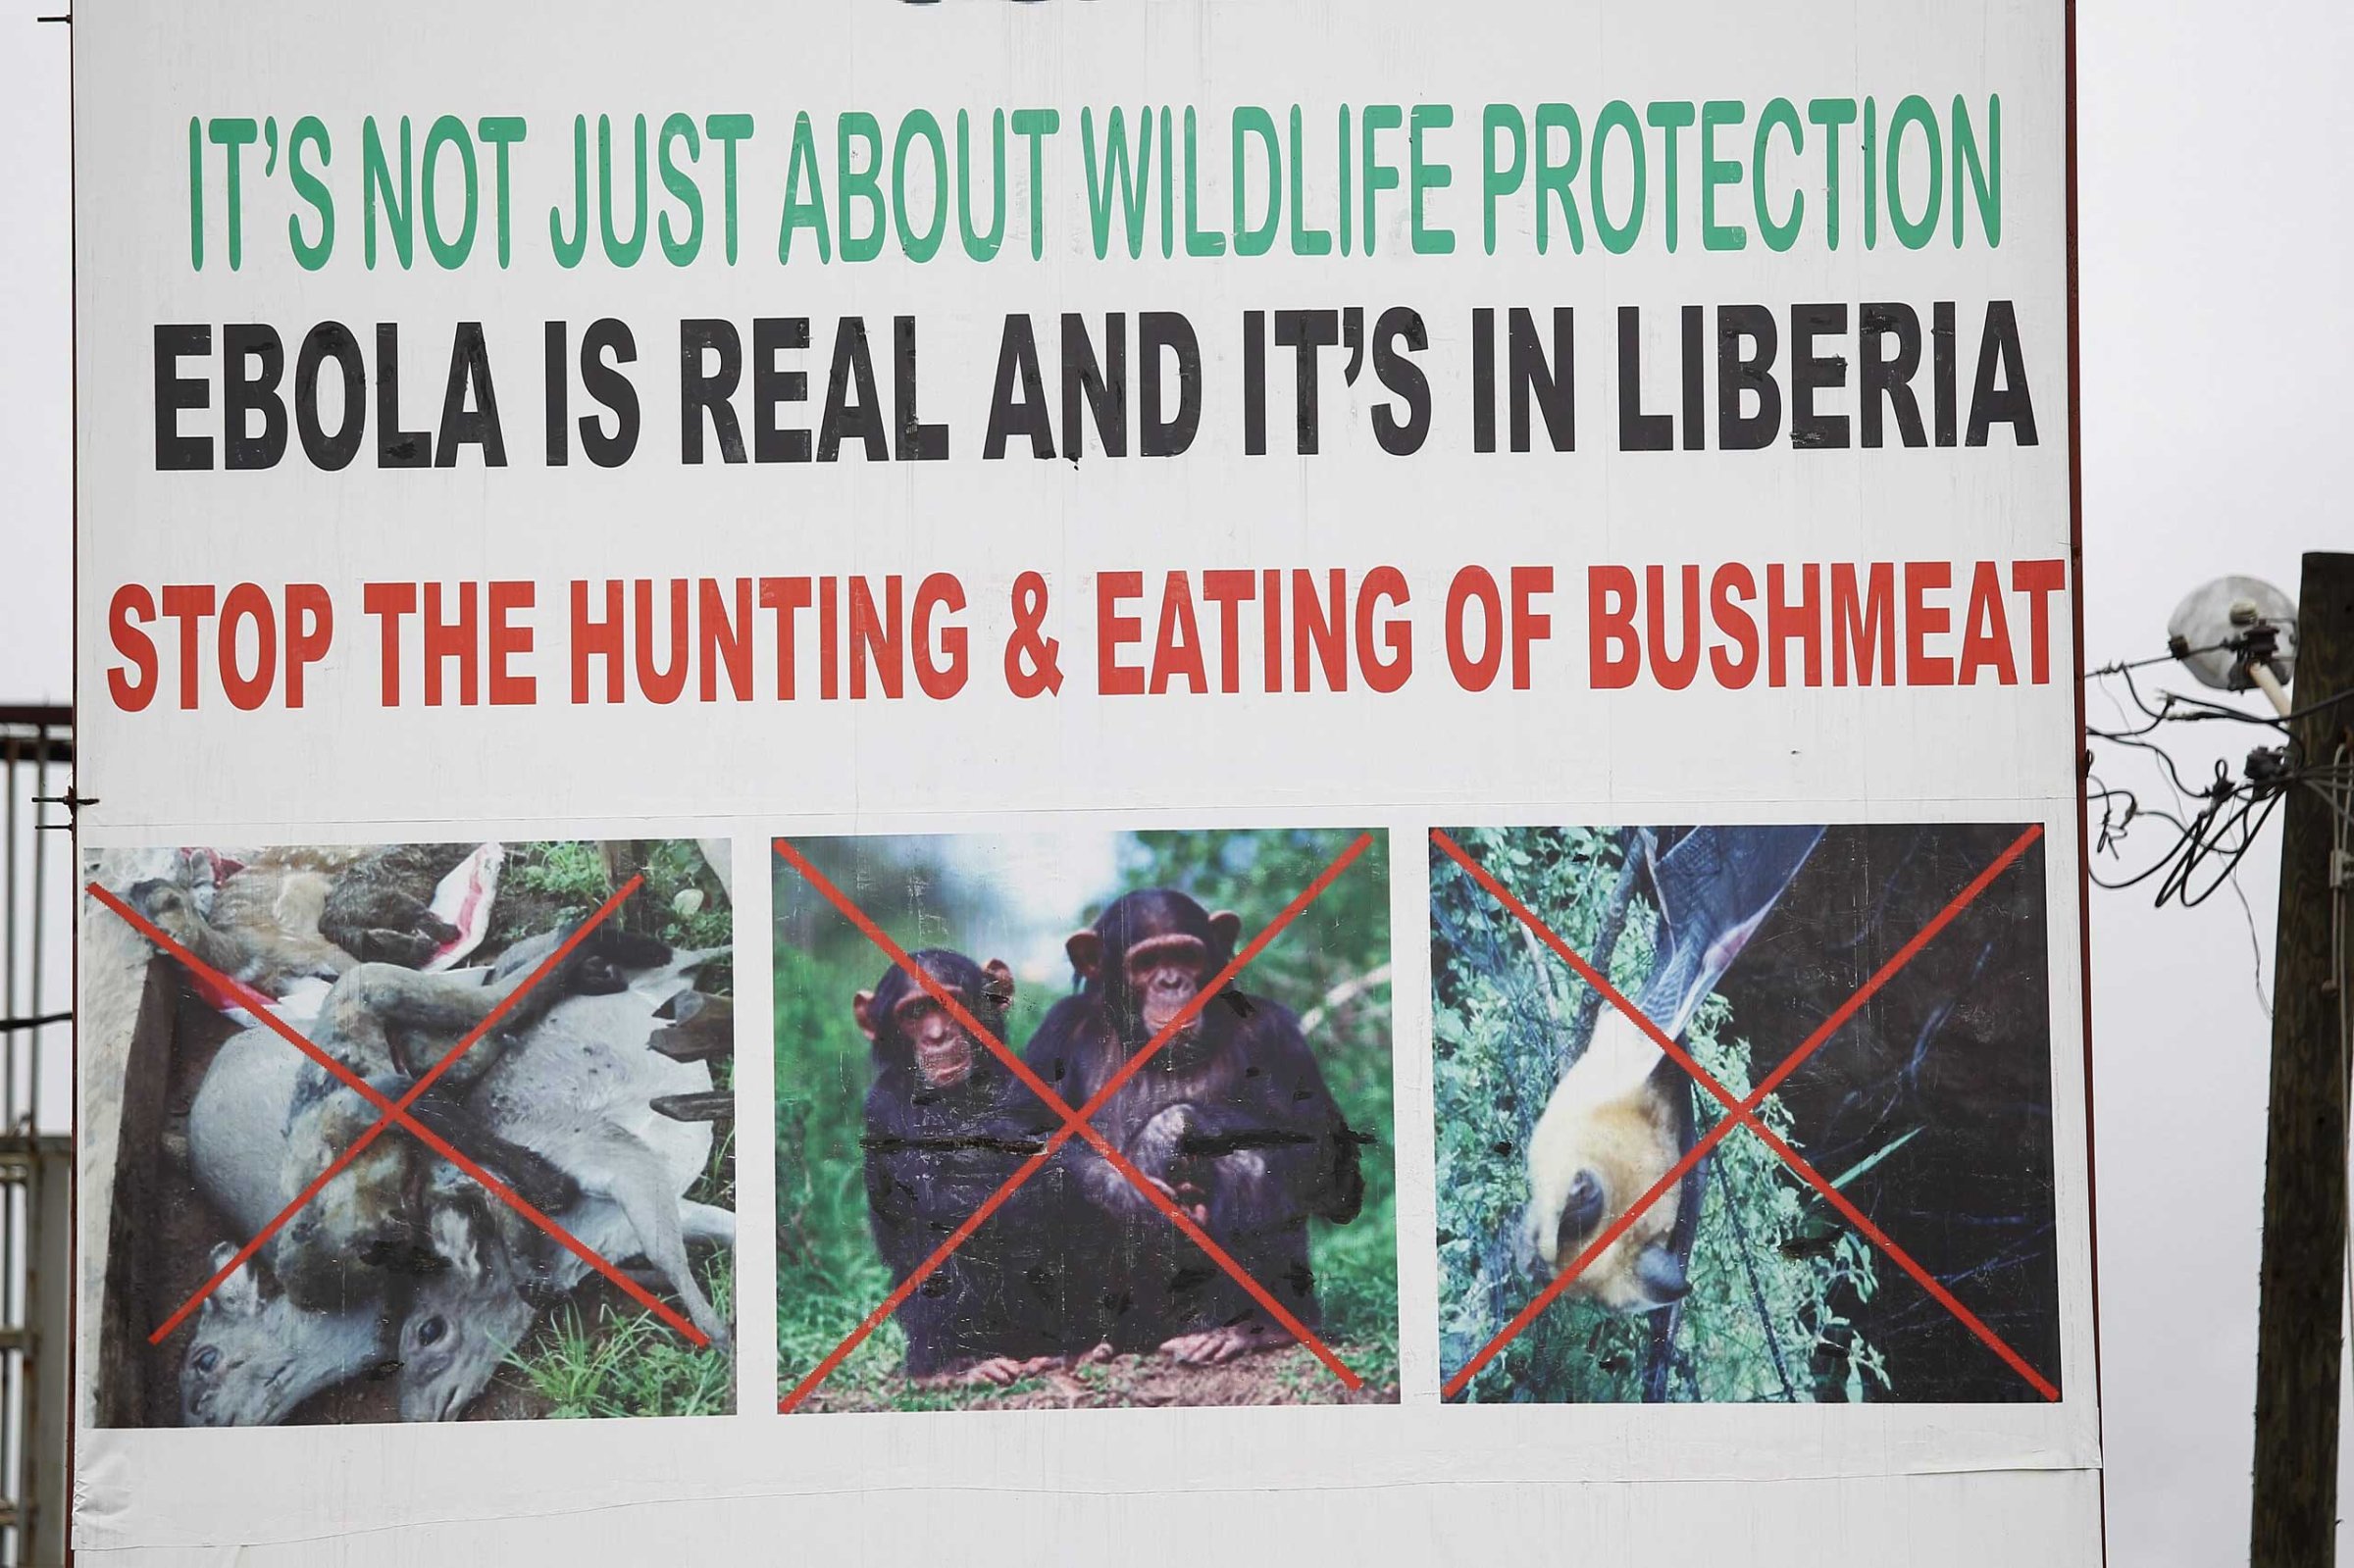 A billboard warning against eating wild animals, seen in Monrovia, Liberia, Oct. 6, 2014.